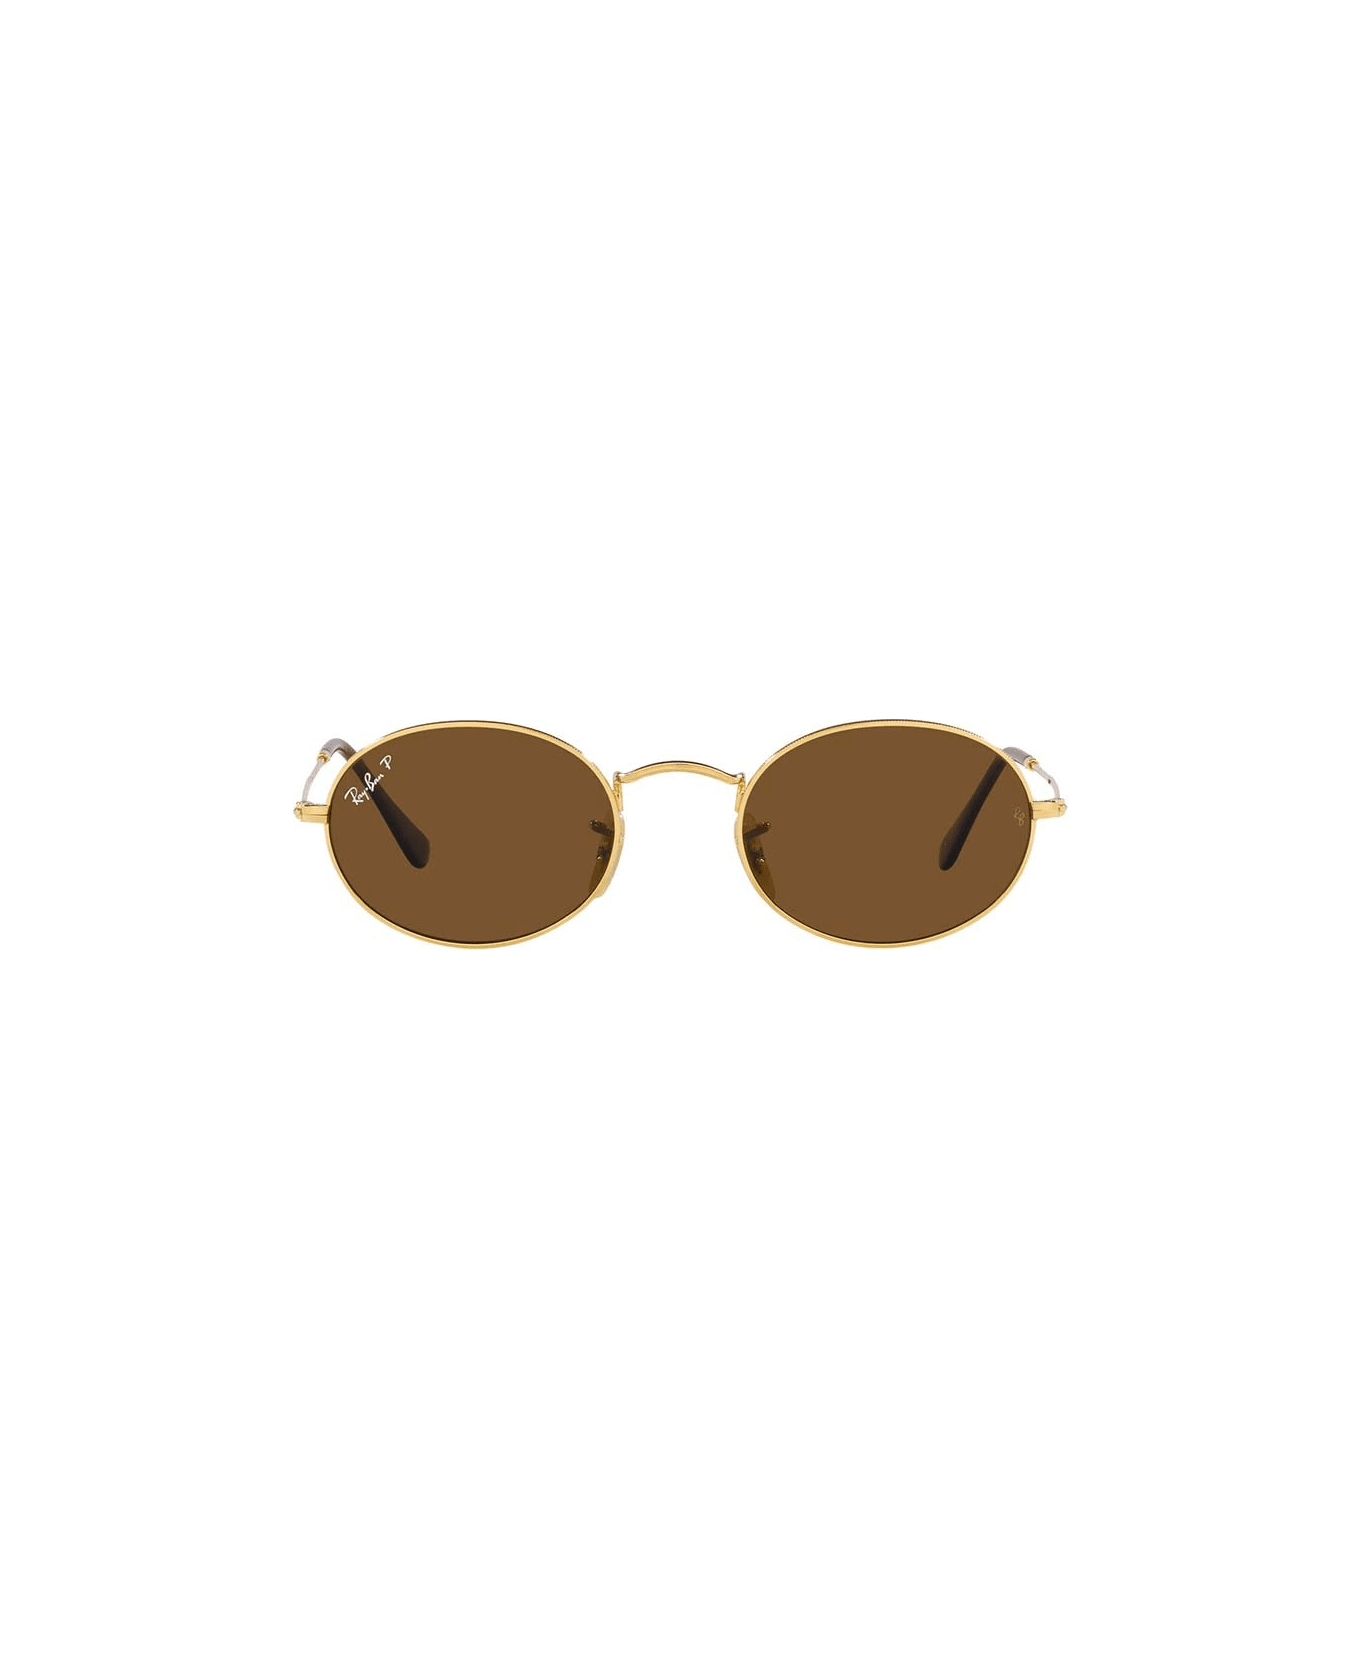 Ray-Ban Sunglasses - Oro/Marrone